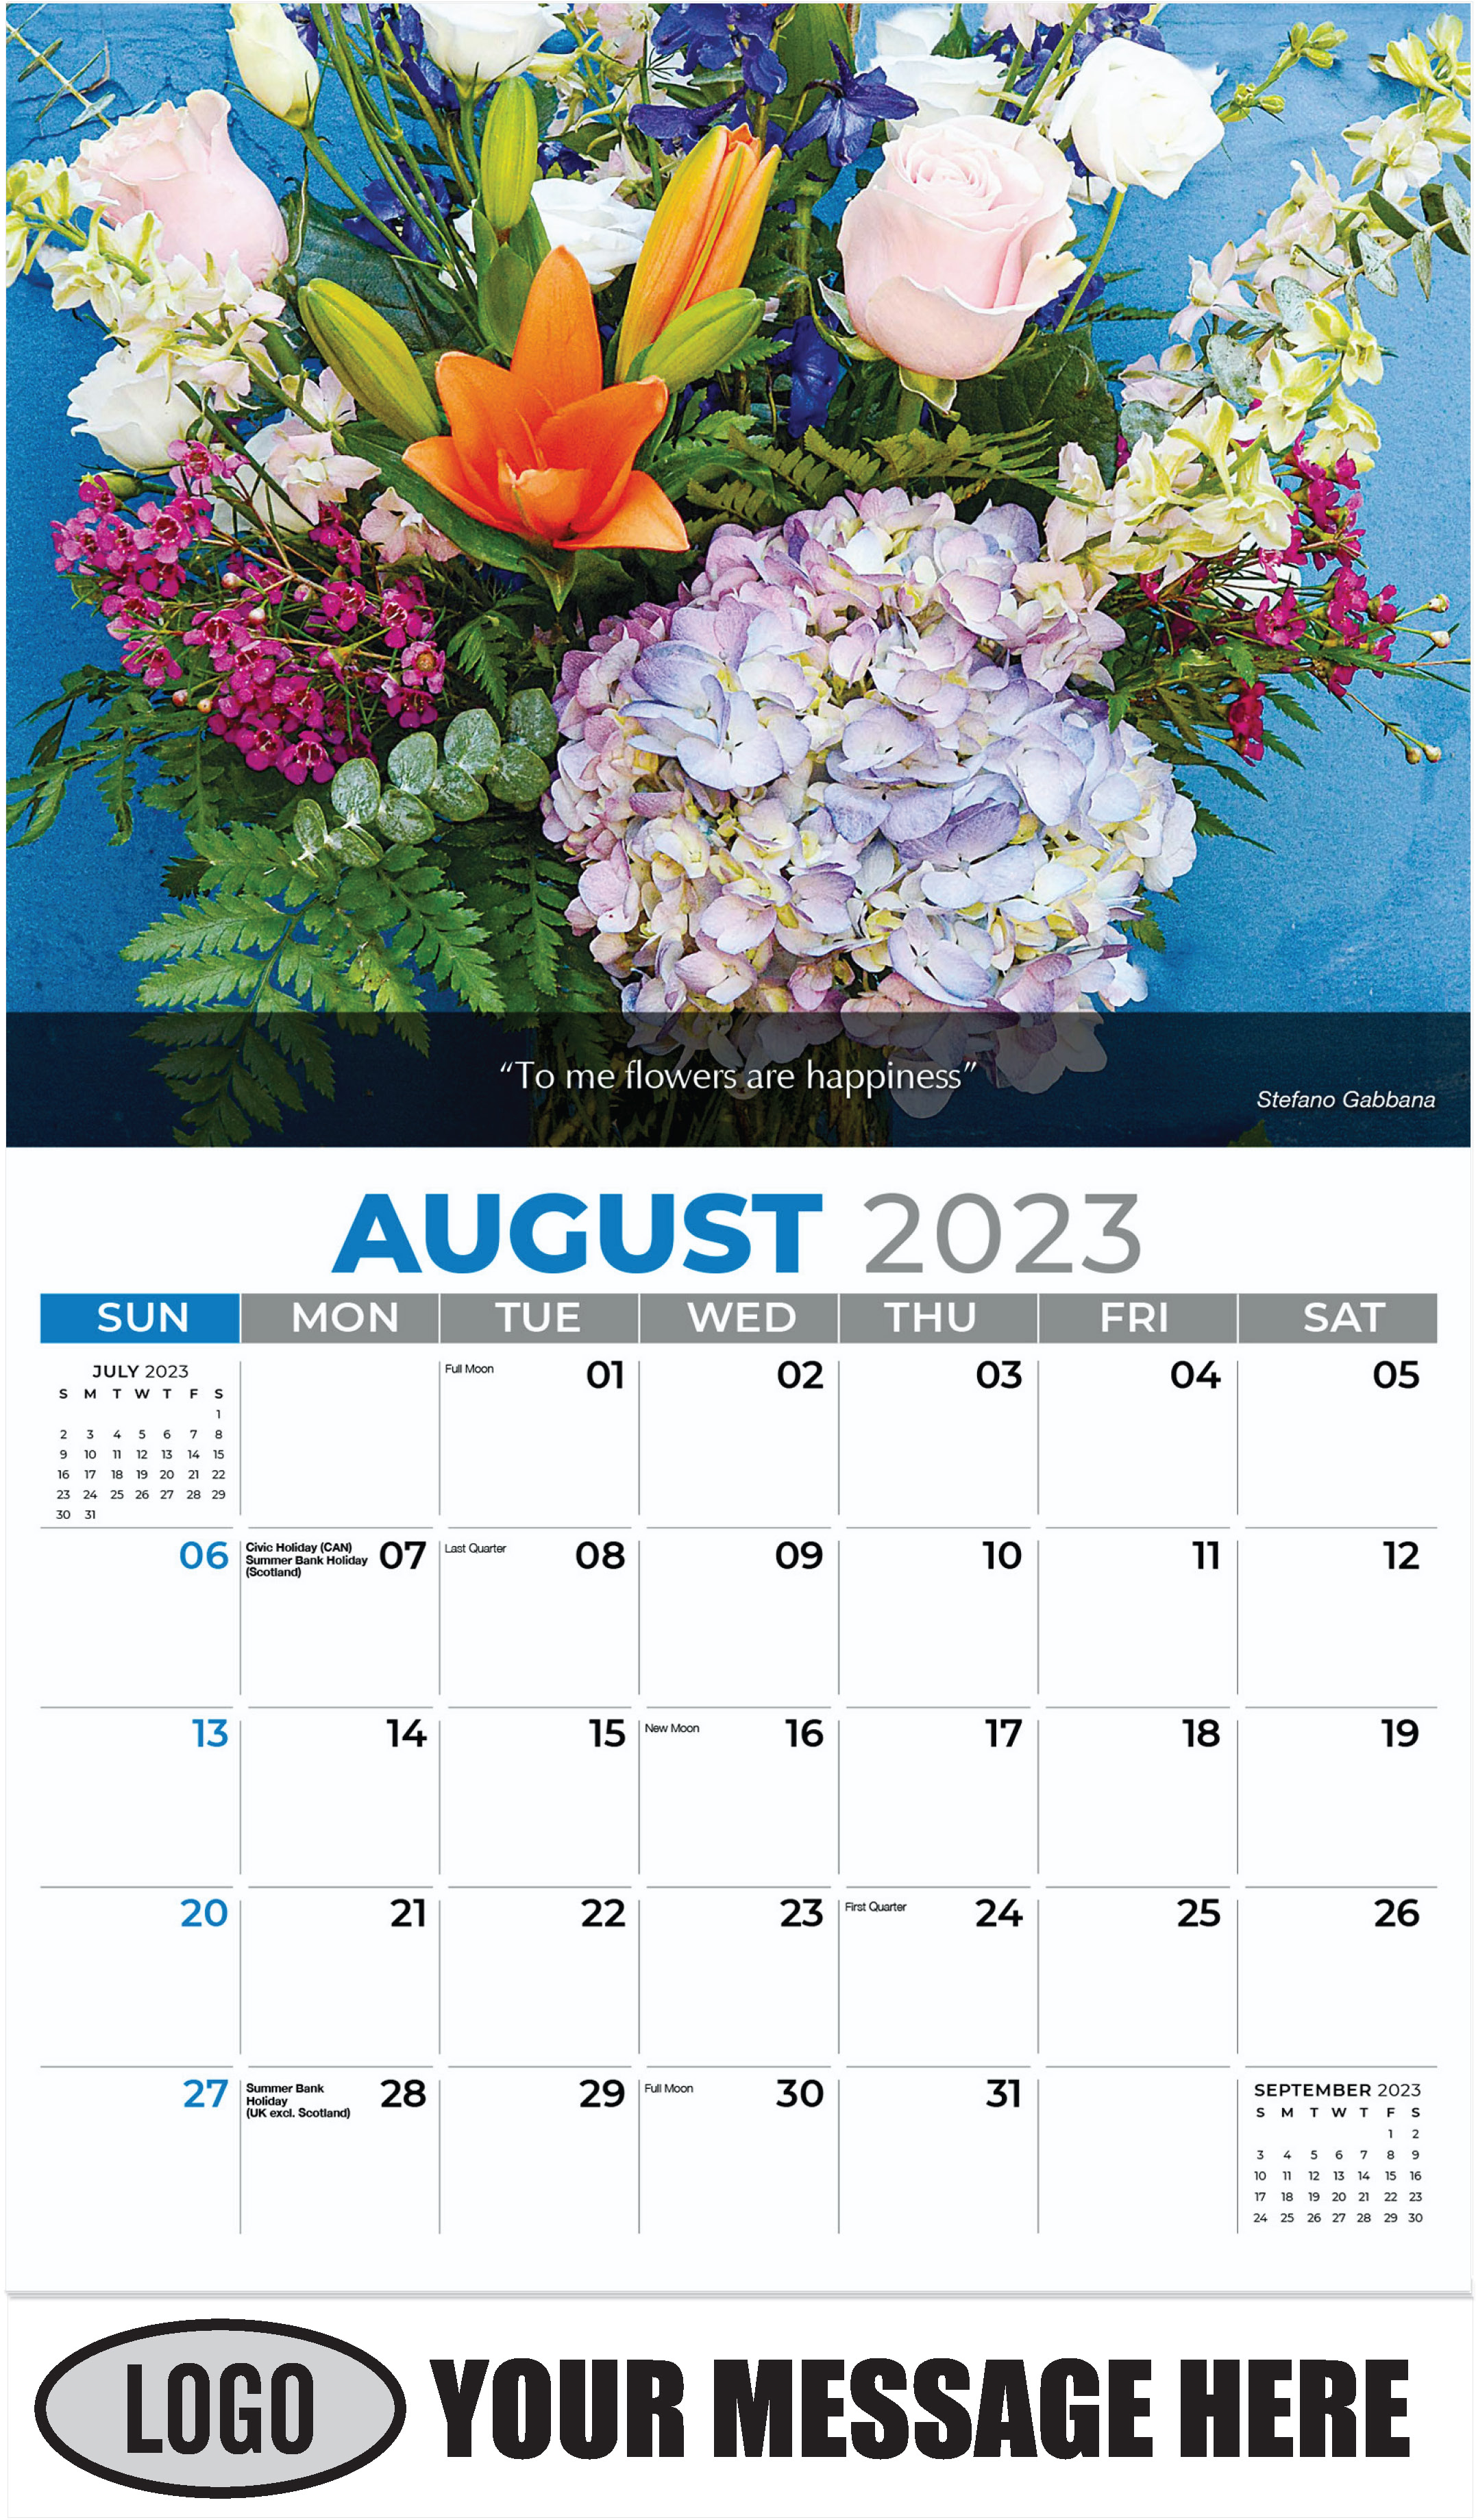 Hydrangea, Delphinium, Roses & Lilies - August - Flowers & Gardens 2023 Promotional Calendar